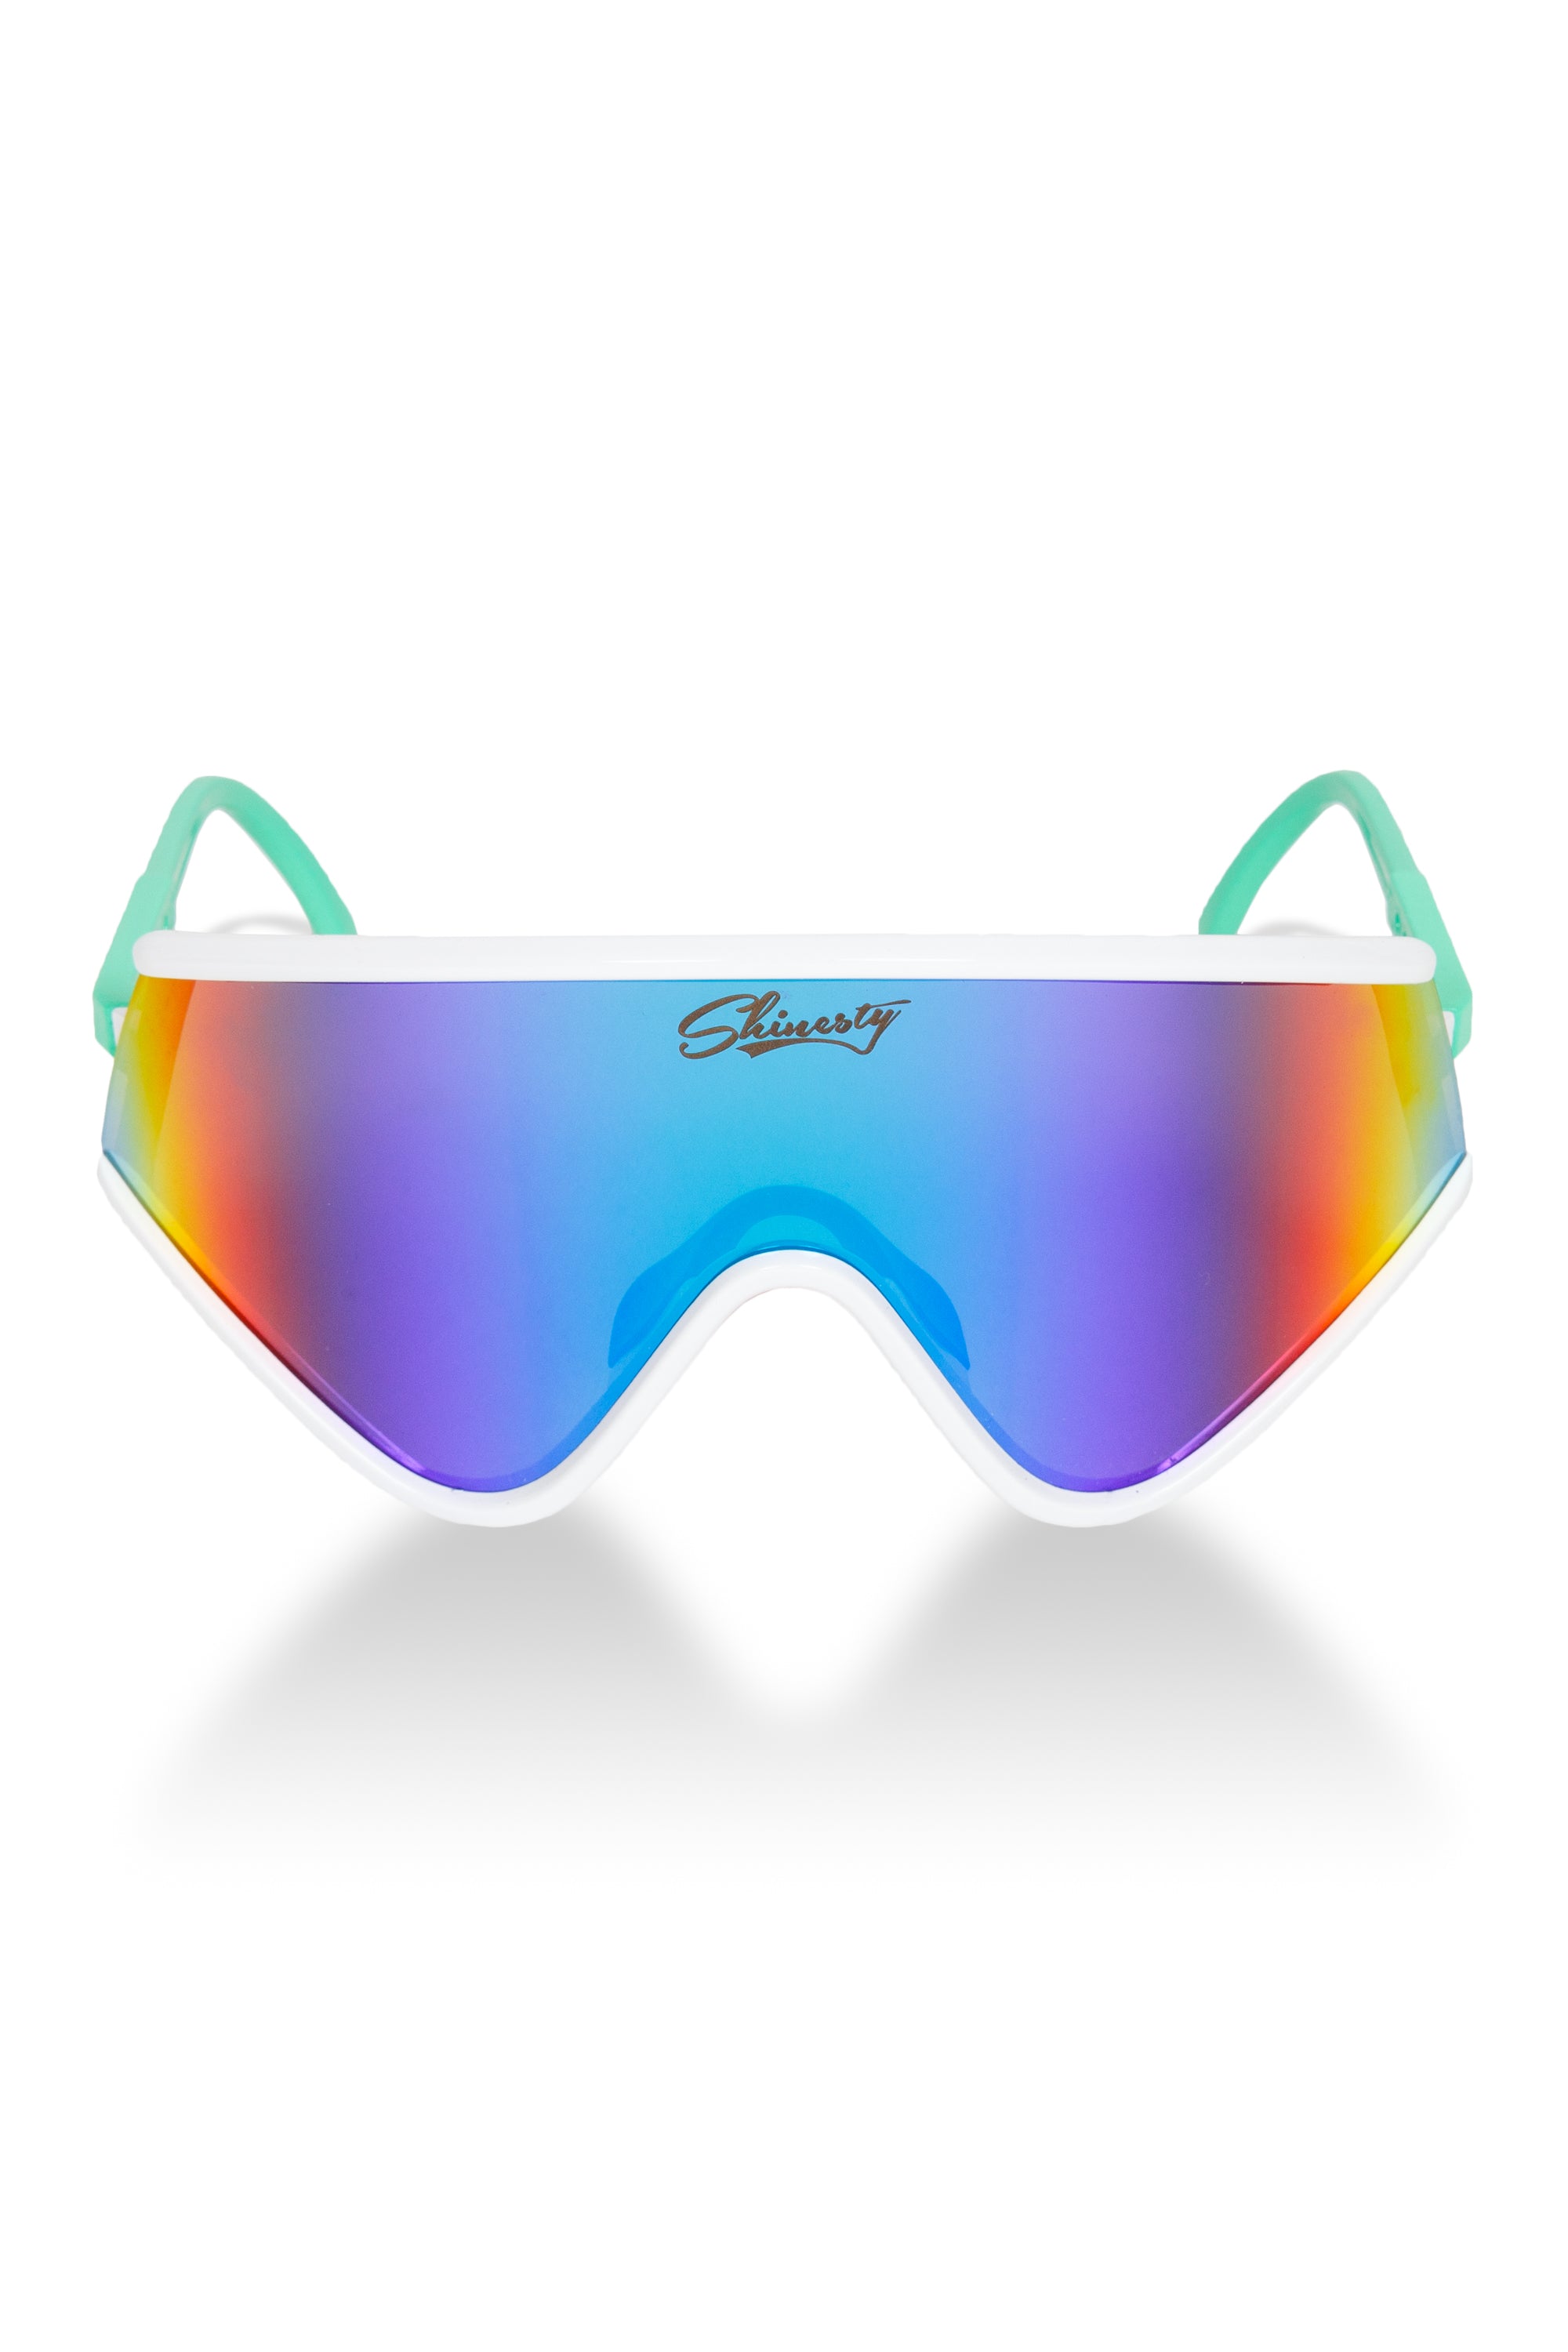 Shinesty The Machos White & Teal Mirrored 80s Ski Sunglasses